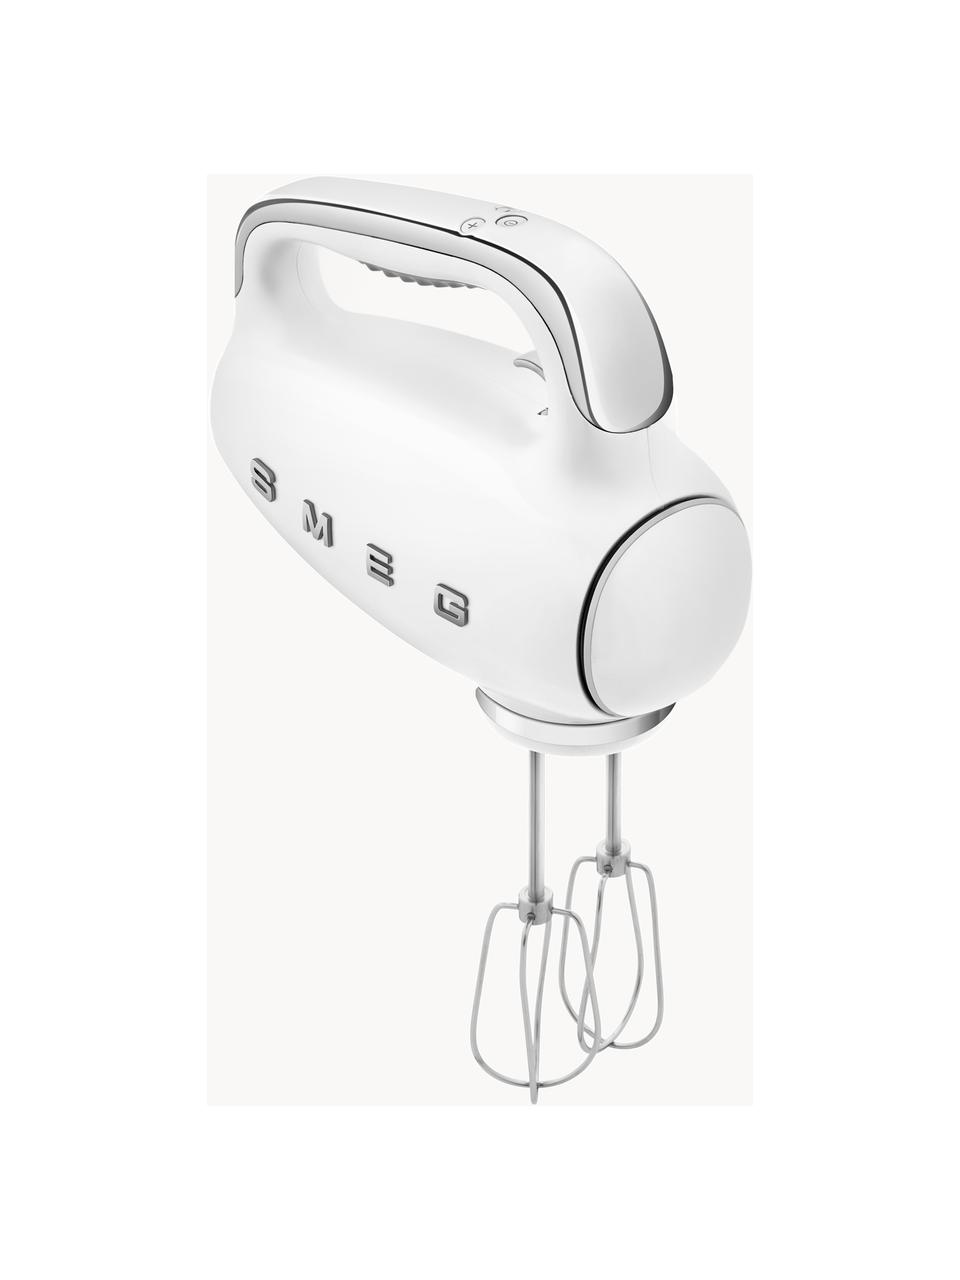 Handrührgerät 50's Style, Gehäuse: Aluminium und Kunststoff,, Weiß, glänzend, B 22 x H 22 cm